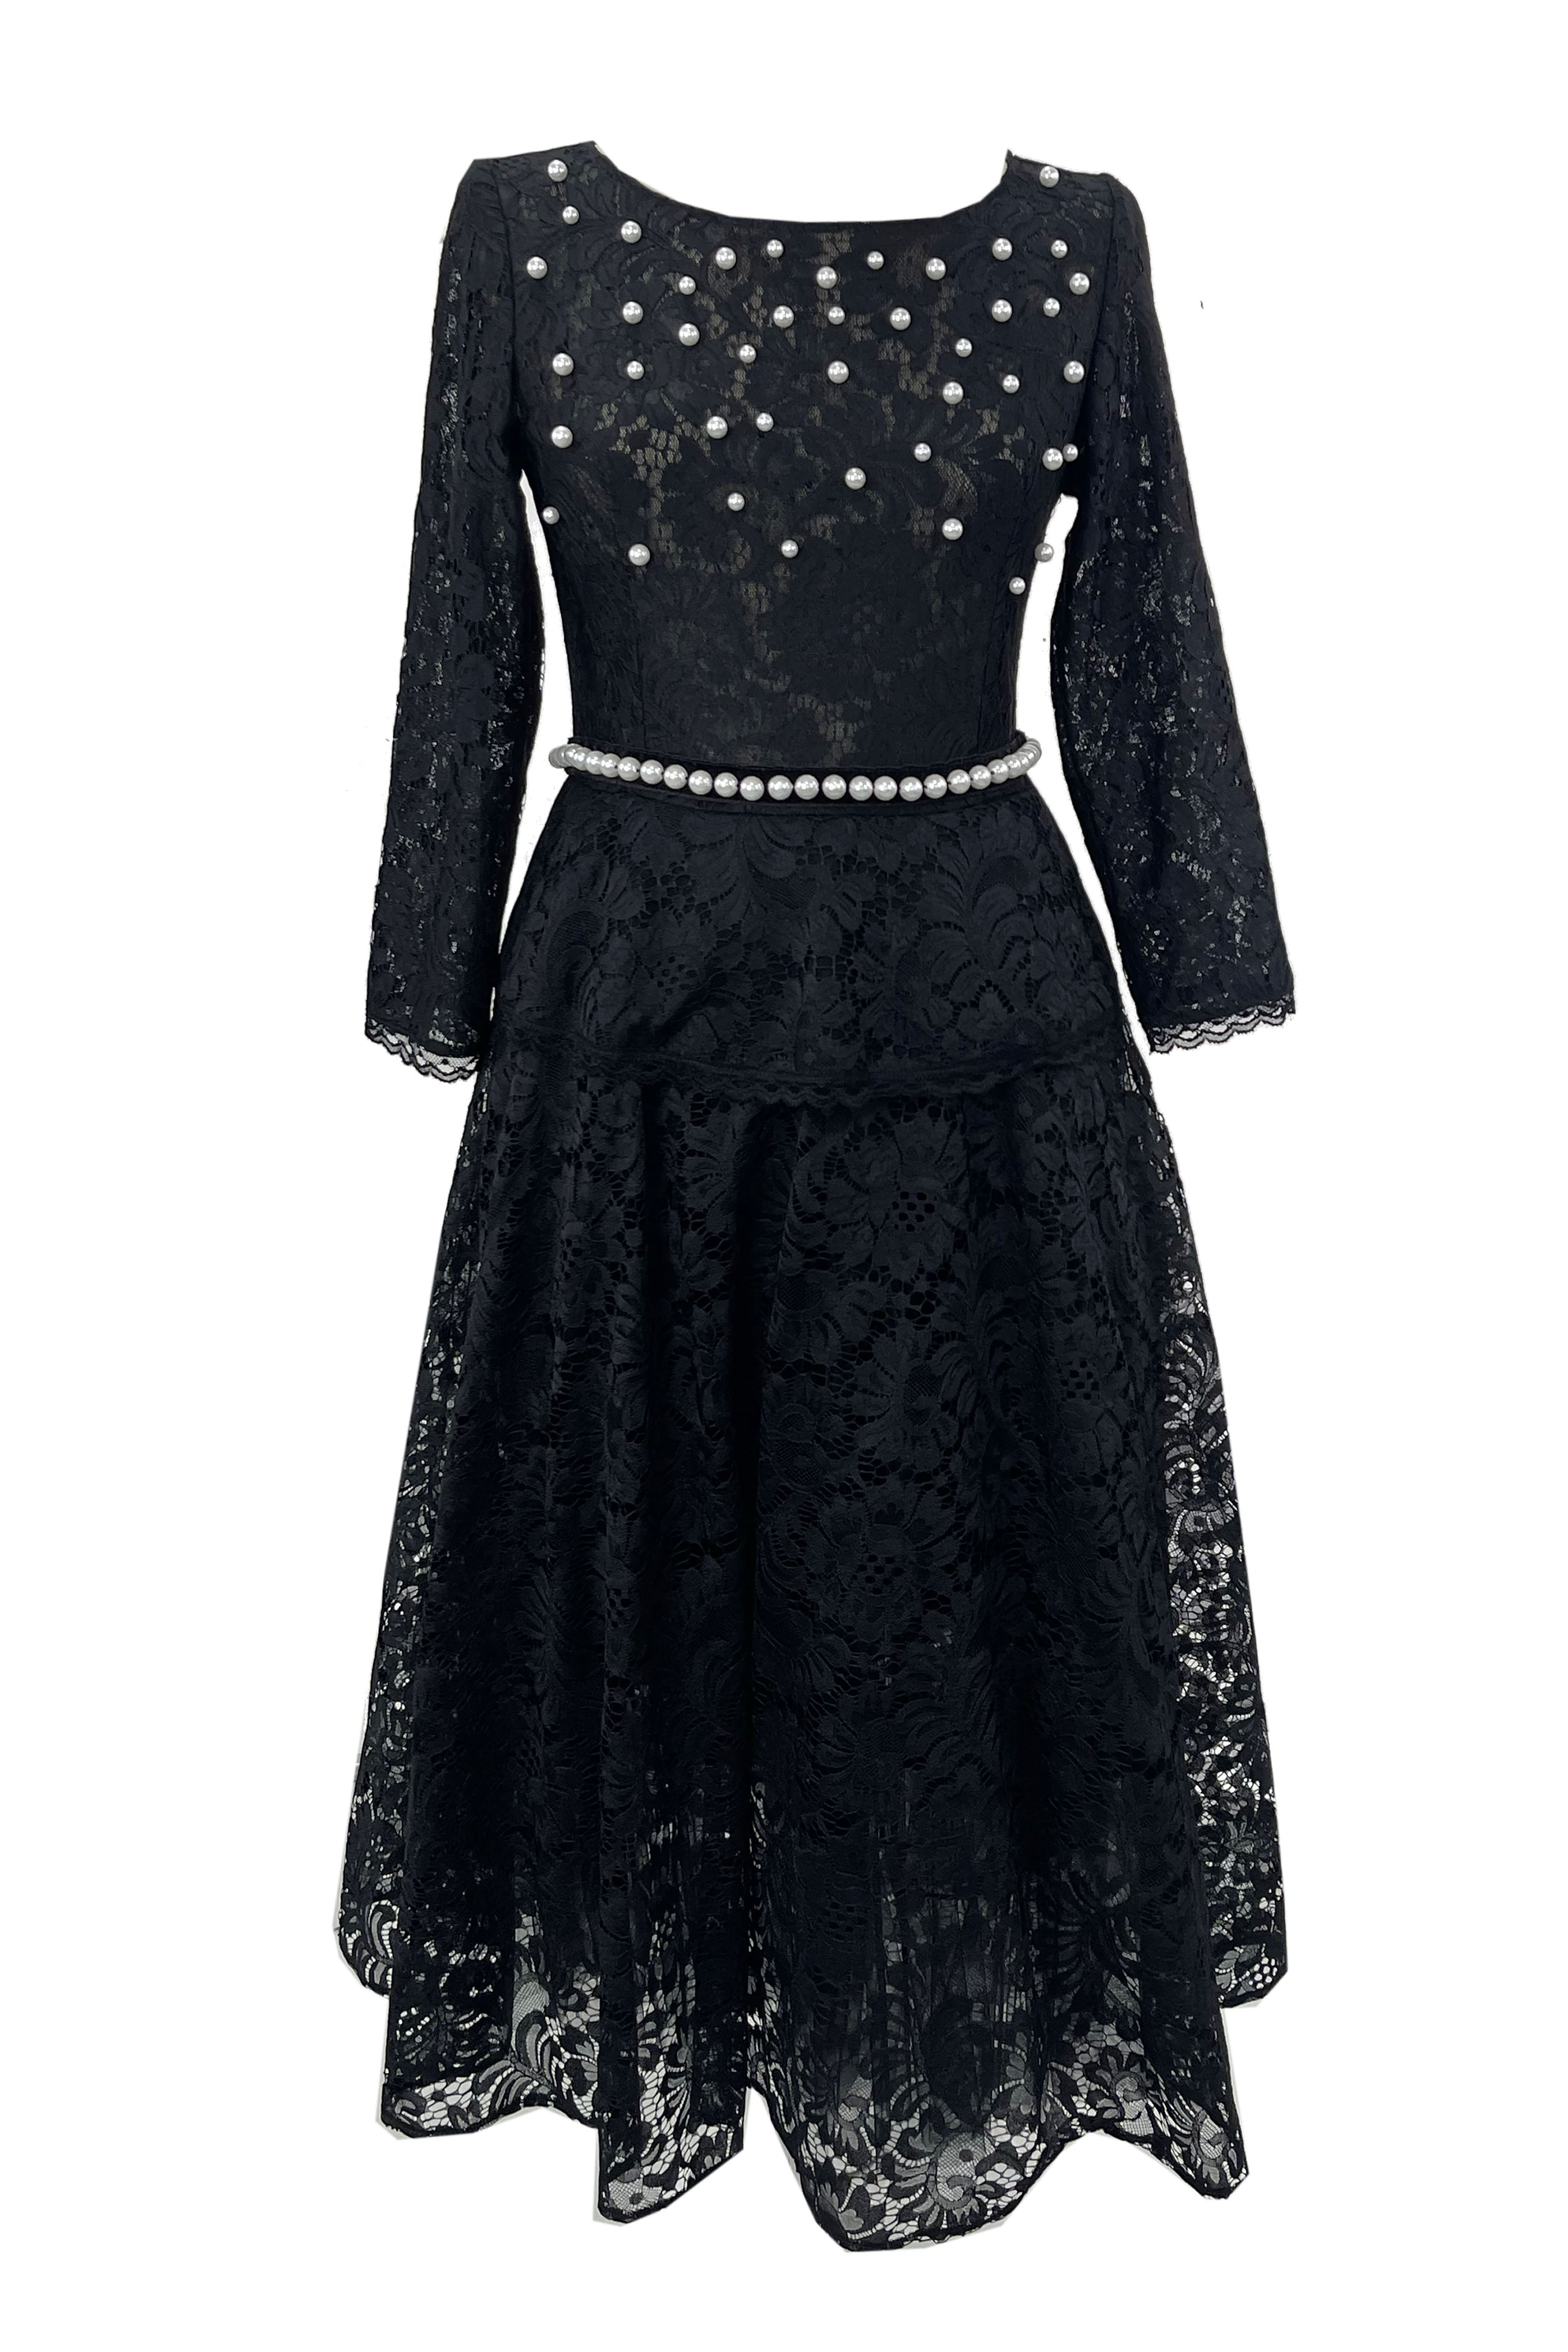 R24122 - BLACK 01 - AMARA black lace midi dress with pearls